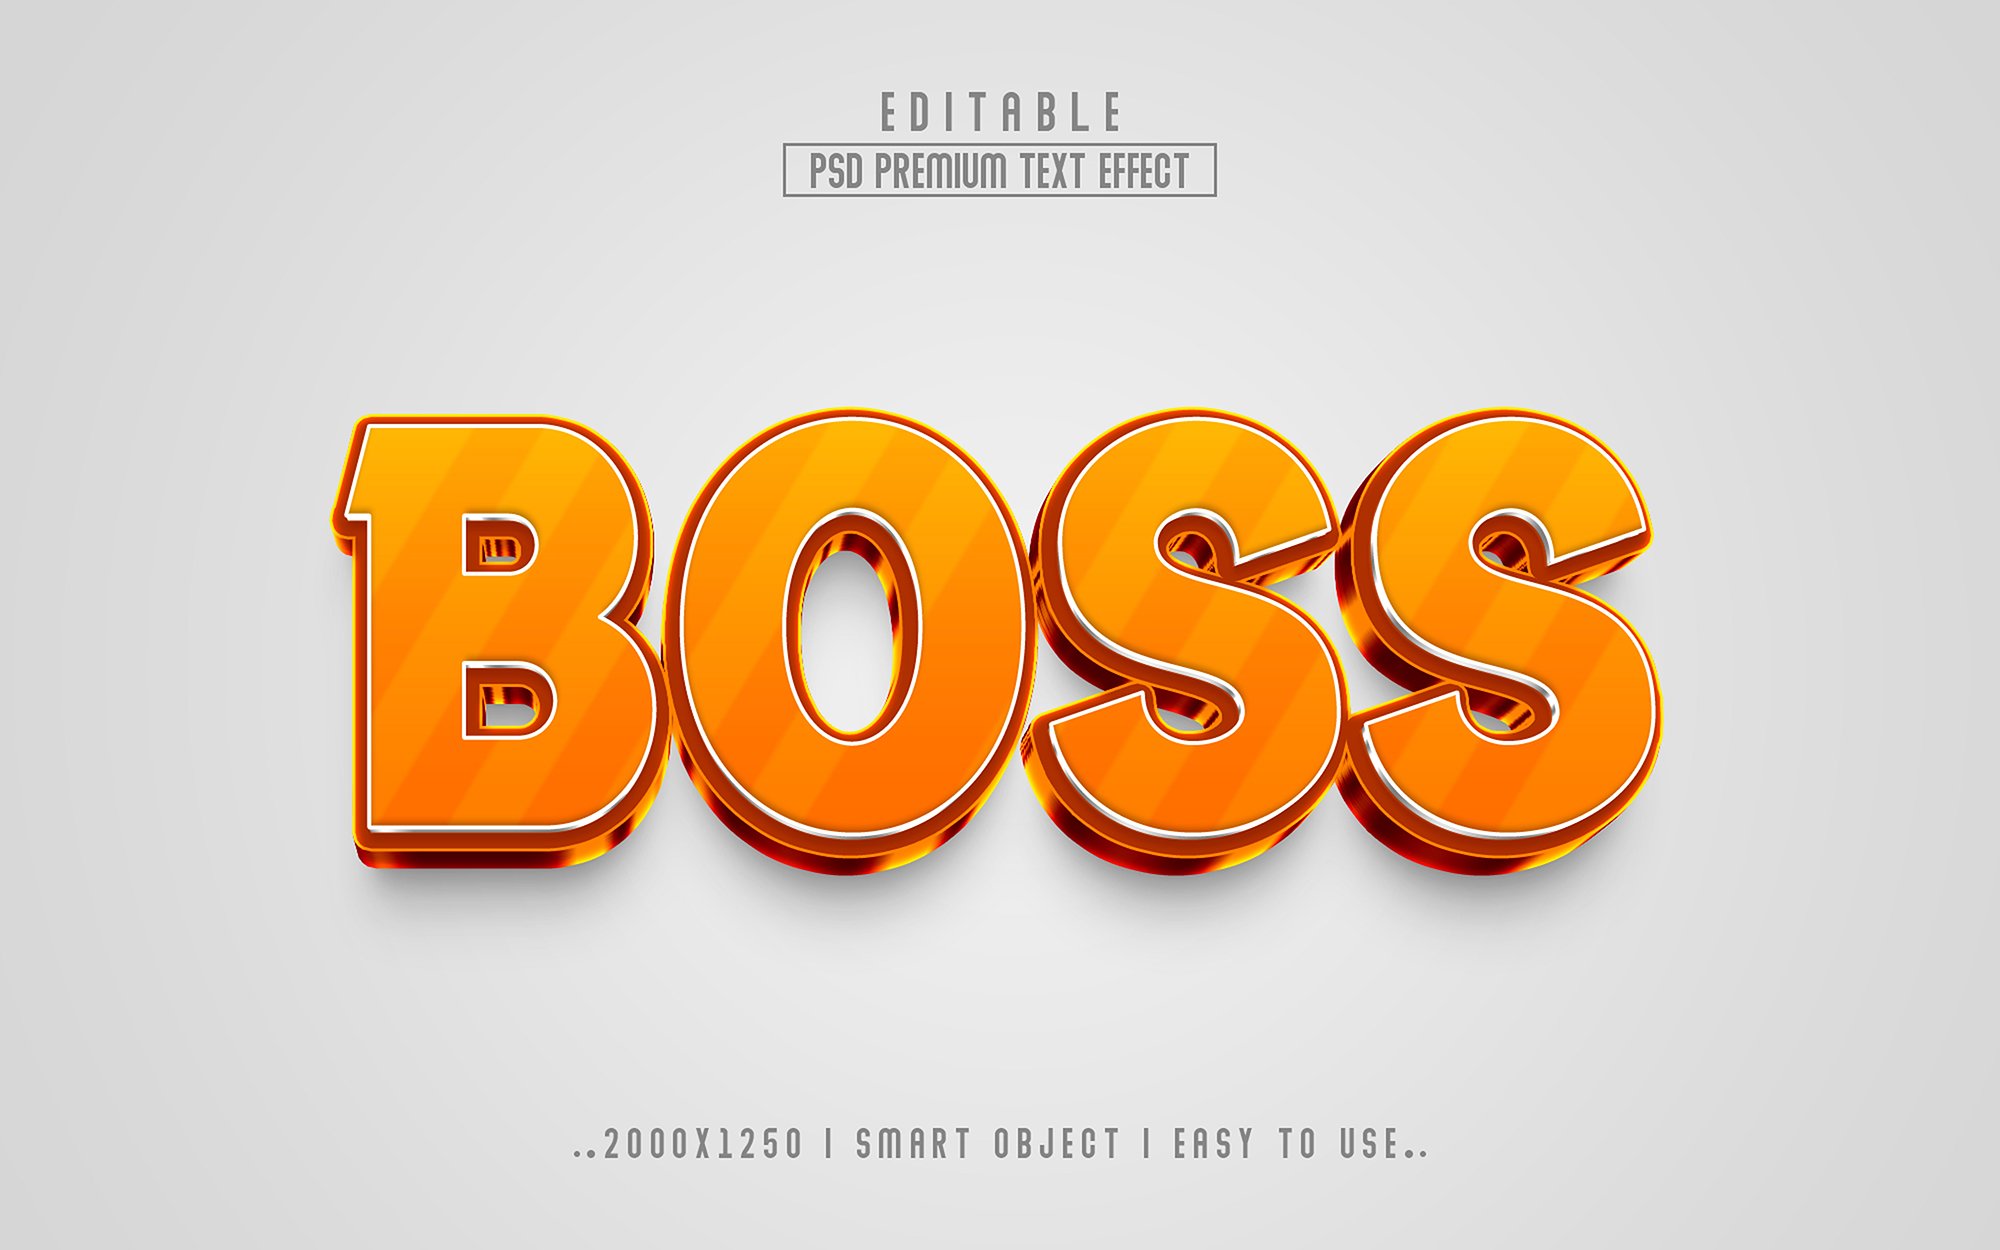 Boss 3D Editable Text Effect stylecover image.